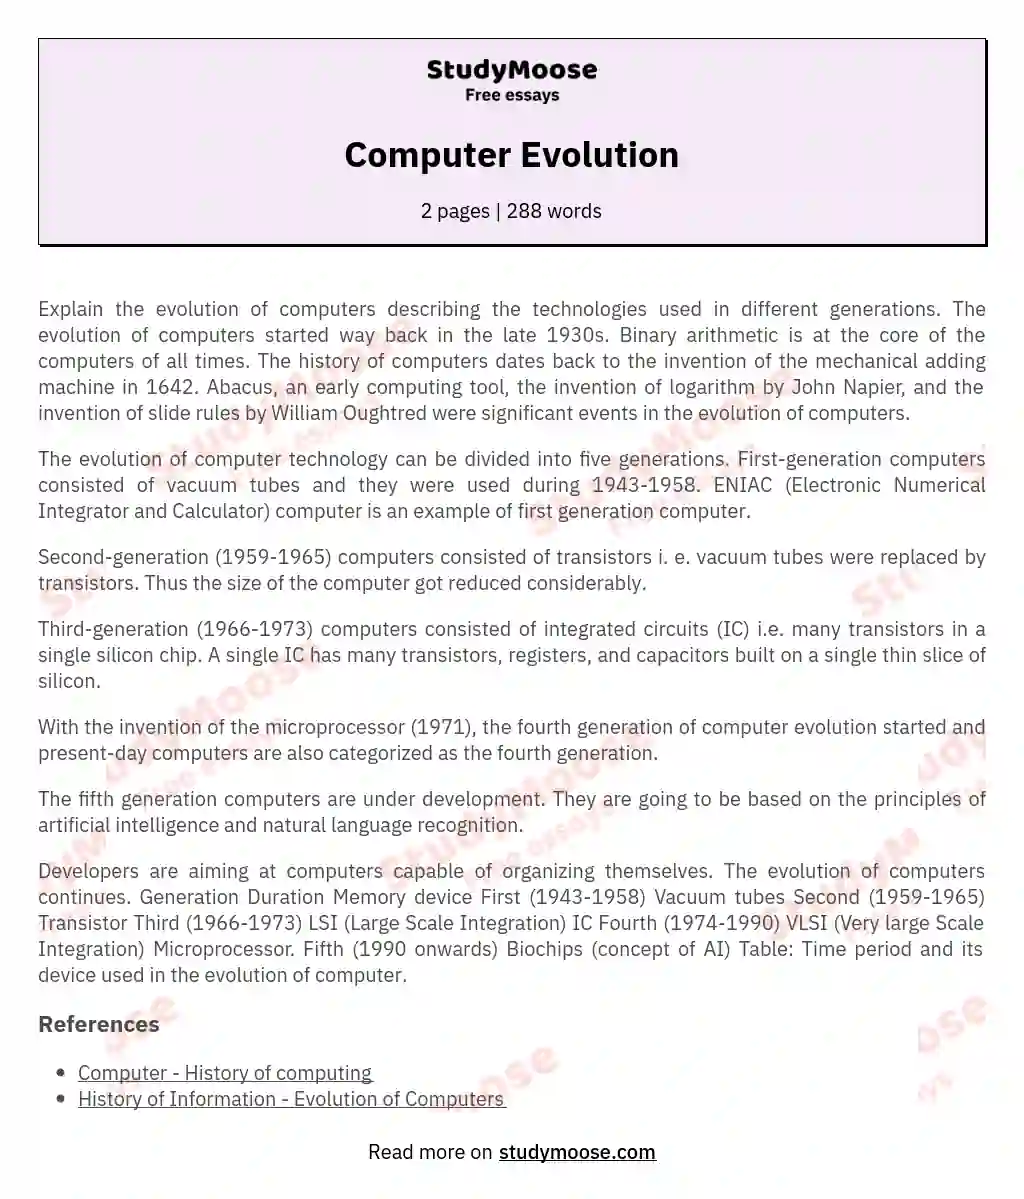 Computer Evolution essay